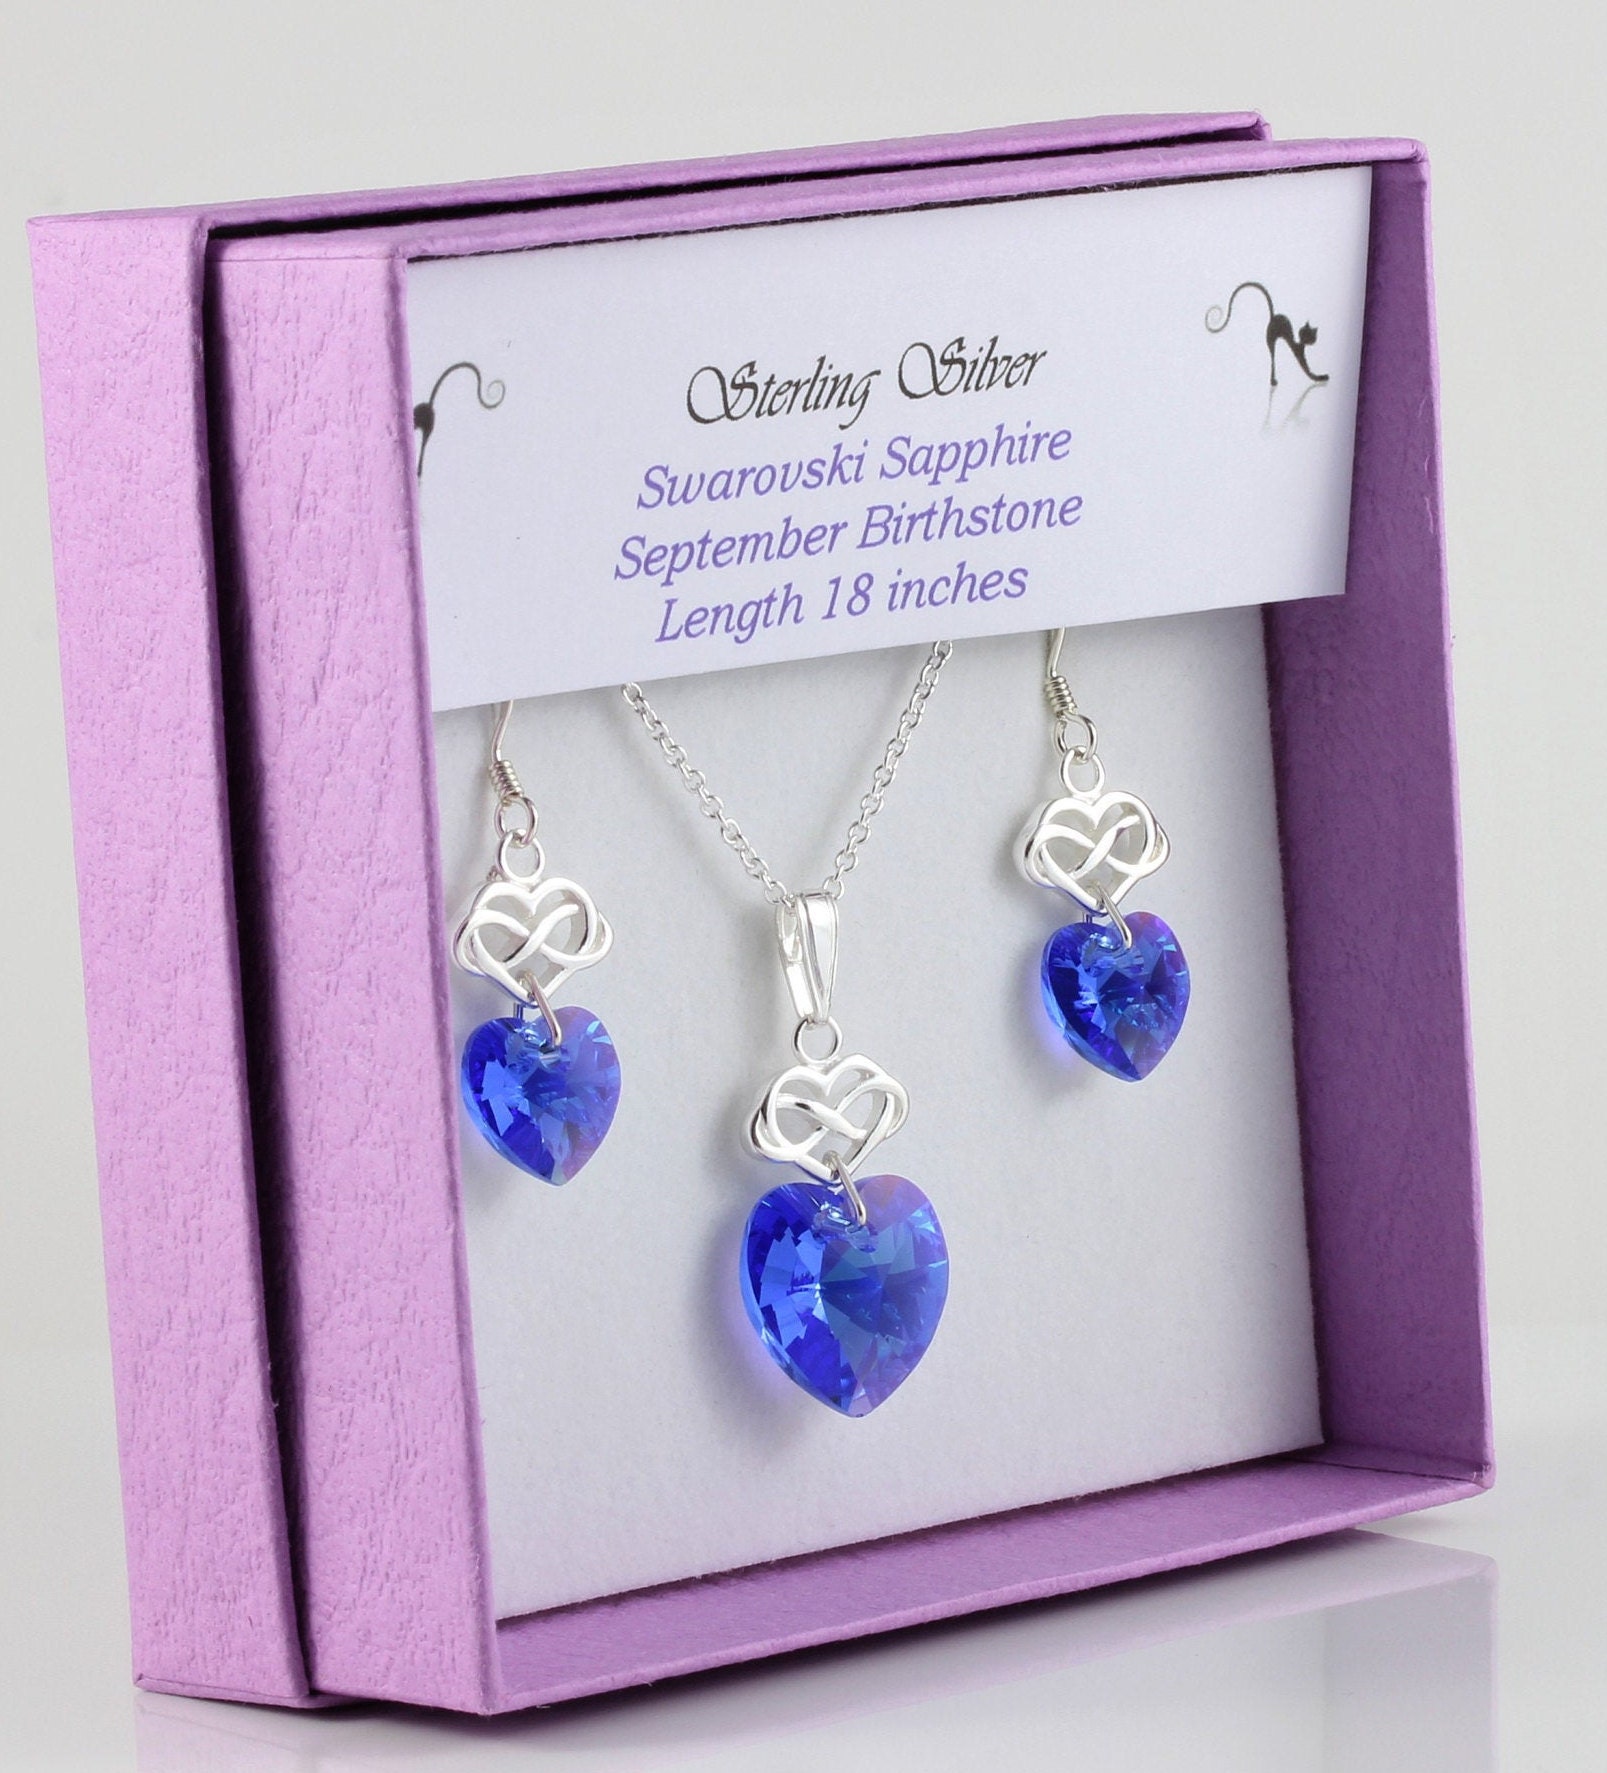 September Birthstone Sterling Silver & Swarovski Sapphire Ab Crystal Infinity Heart Necklace & Earring Set